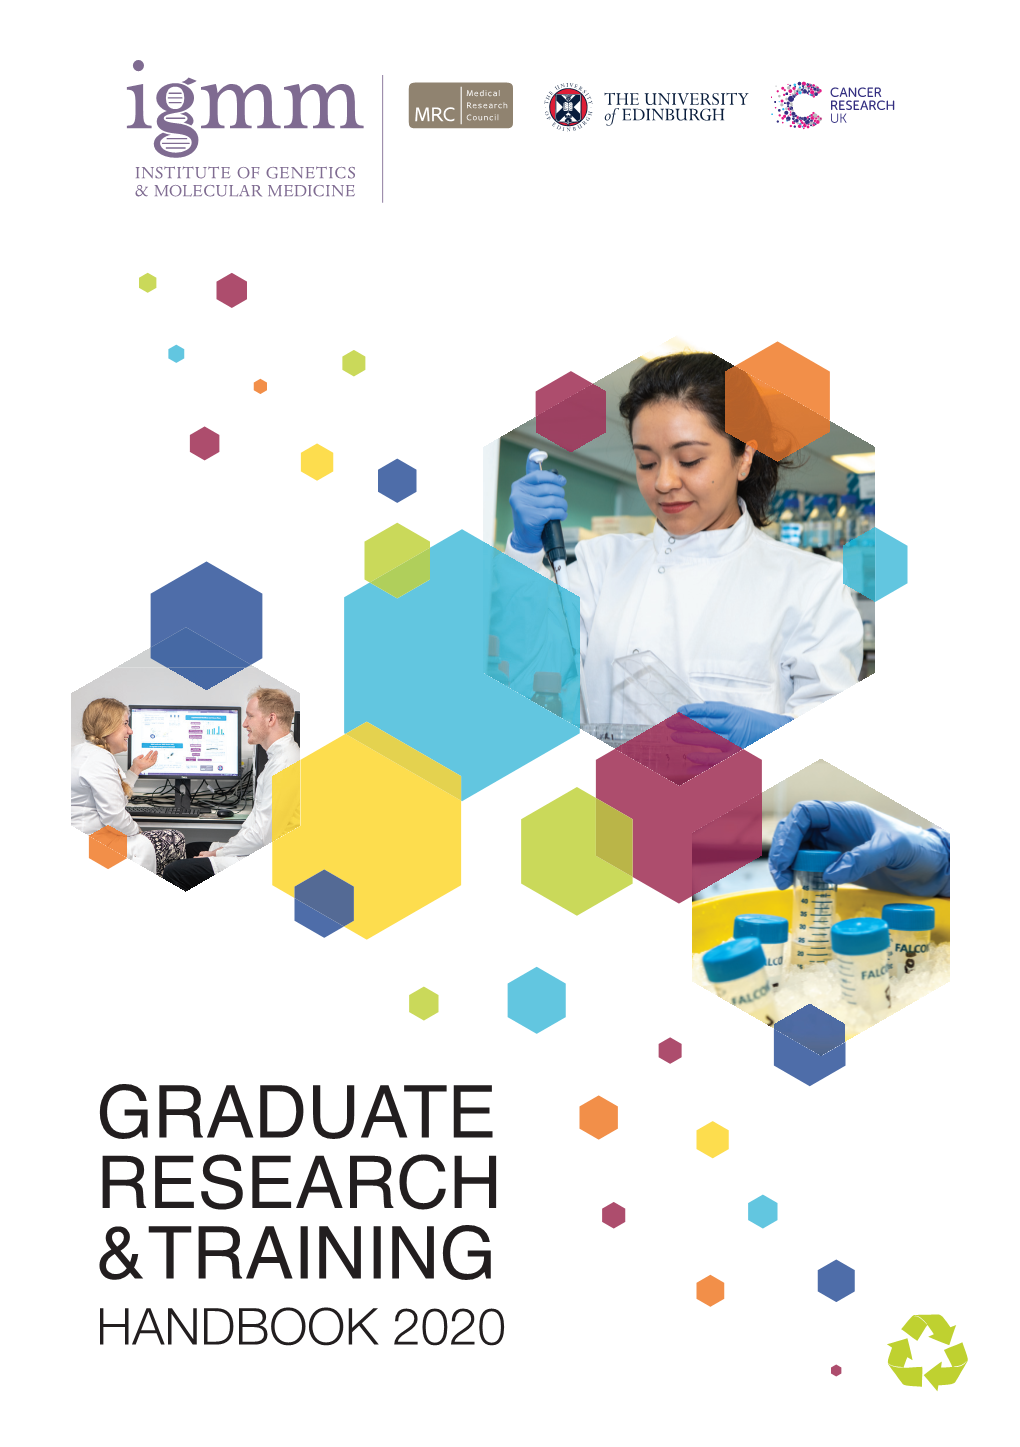 IGMM Graduate Research & Training Handbook 2020